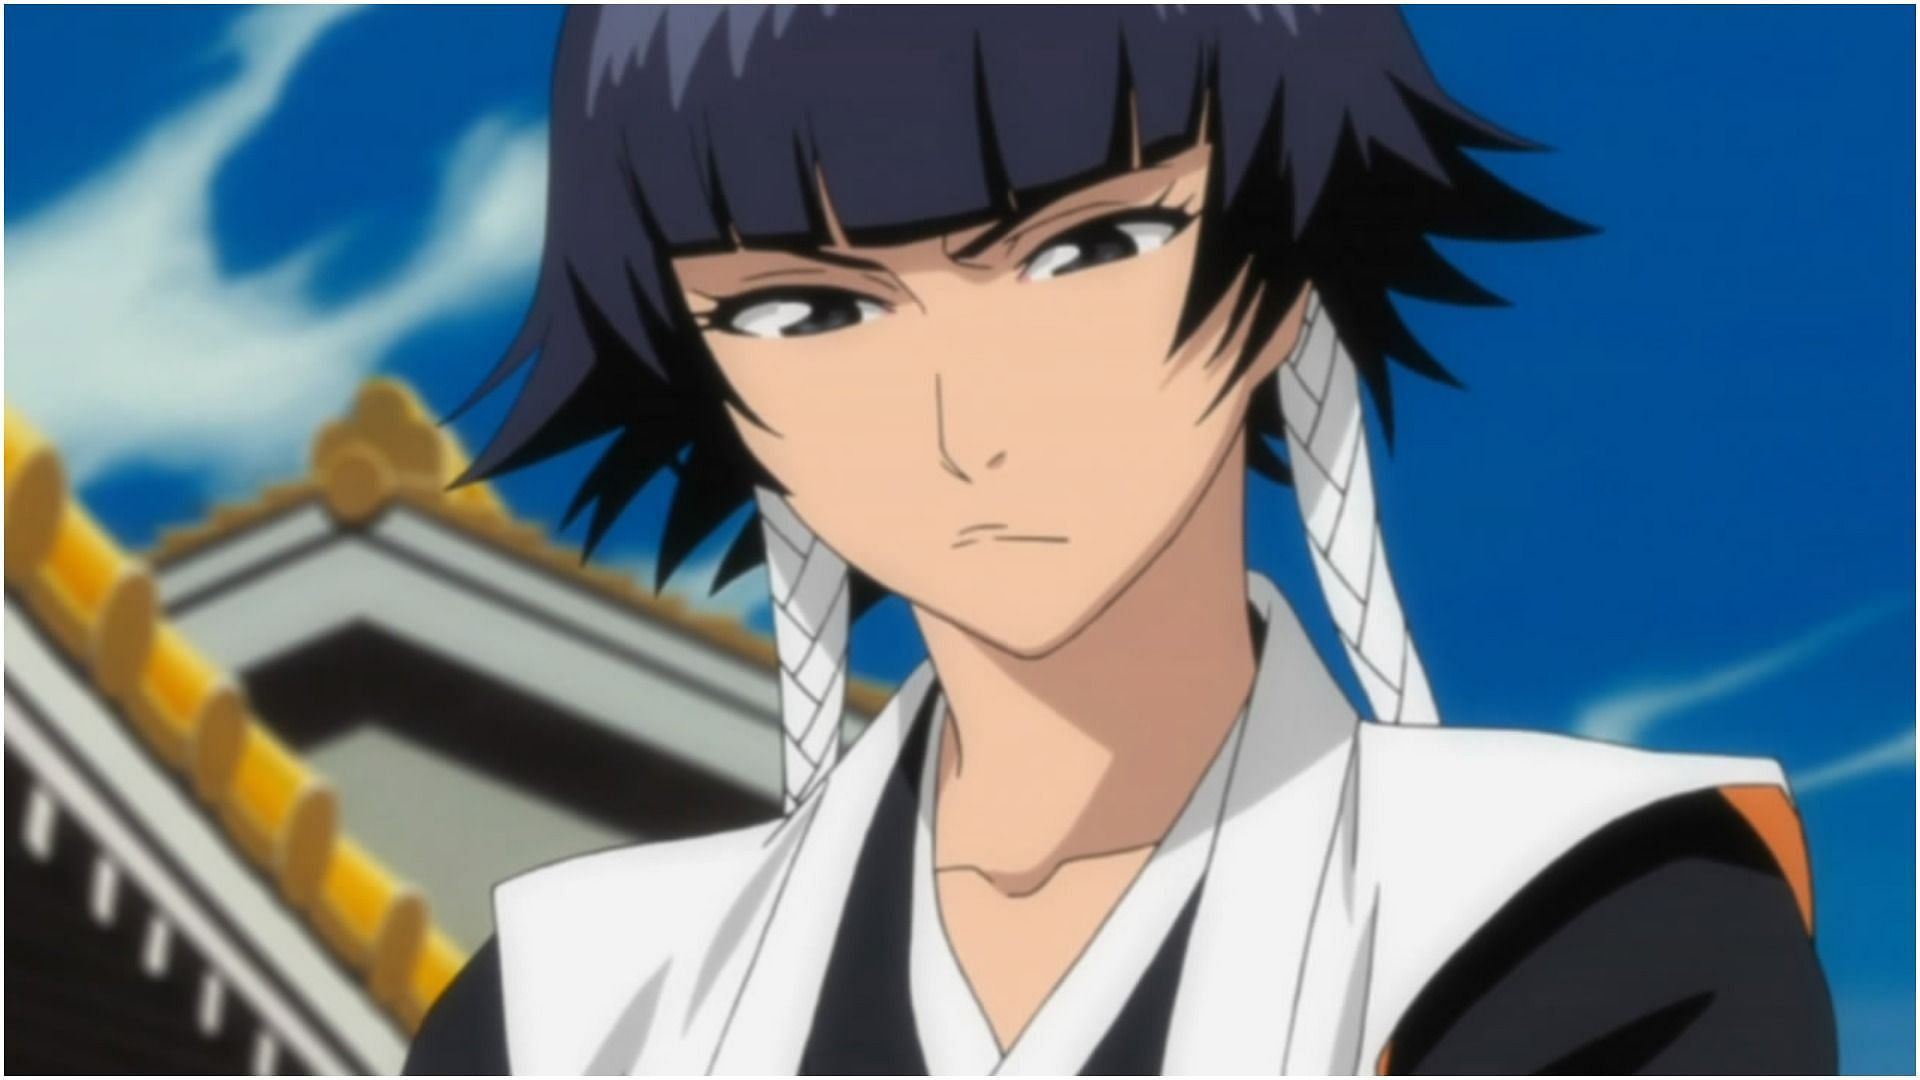 Soi Fon as seen in the anime Bleach (Image via Studio Pierrot)